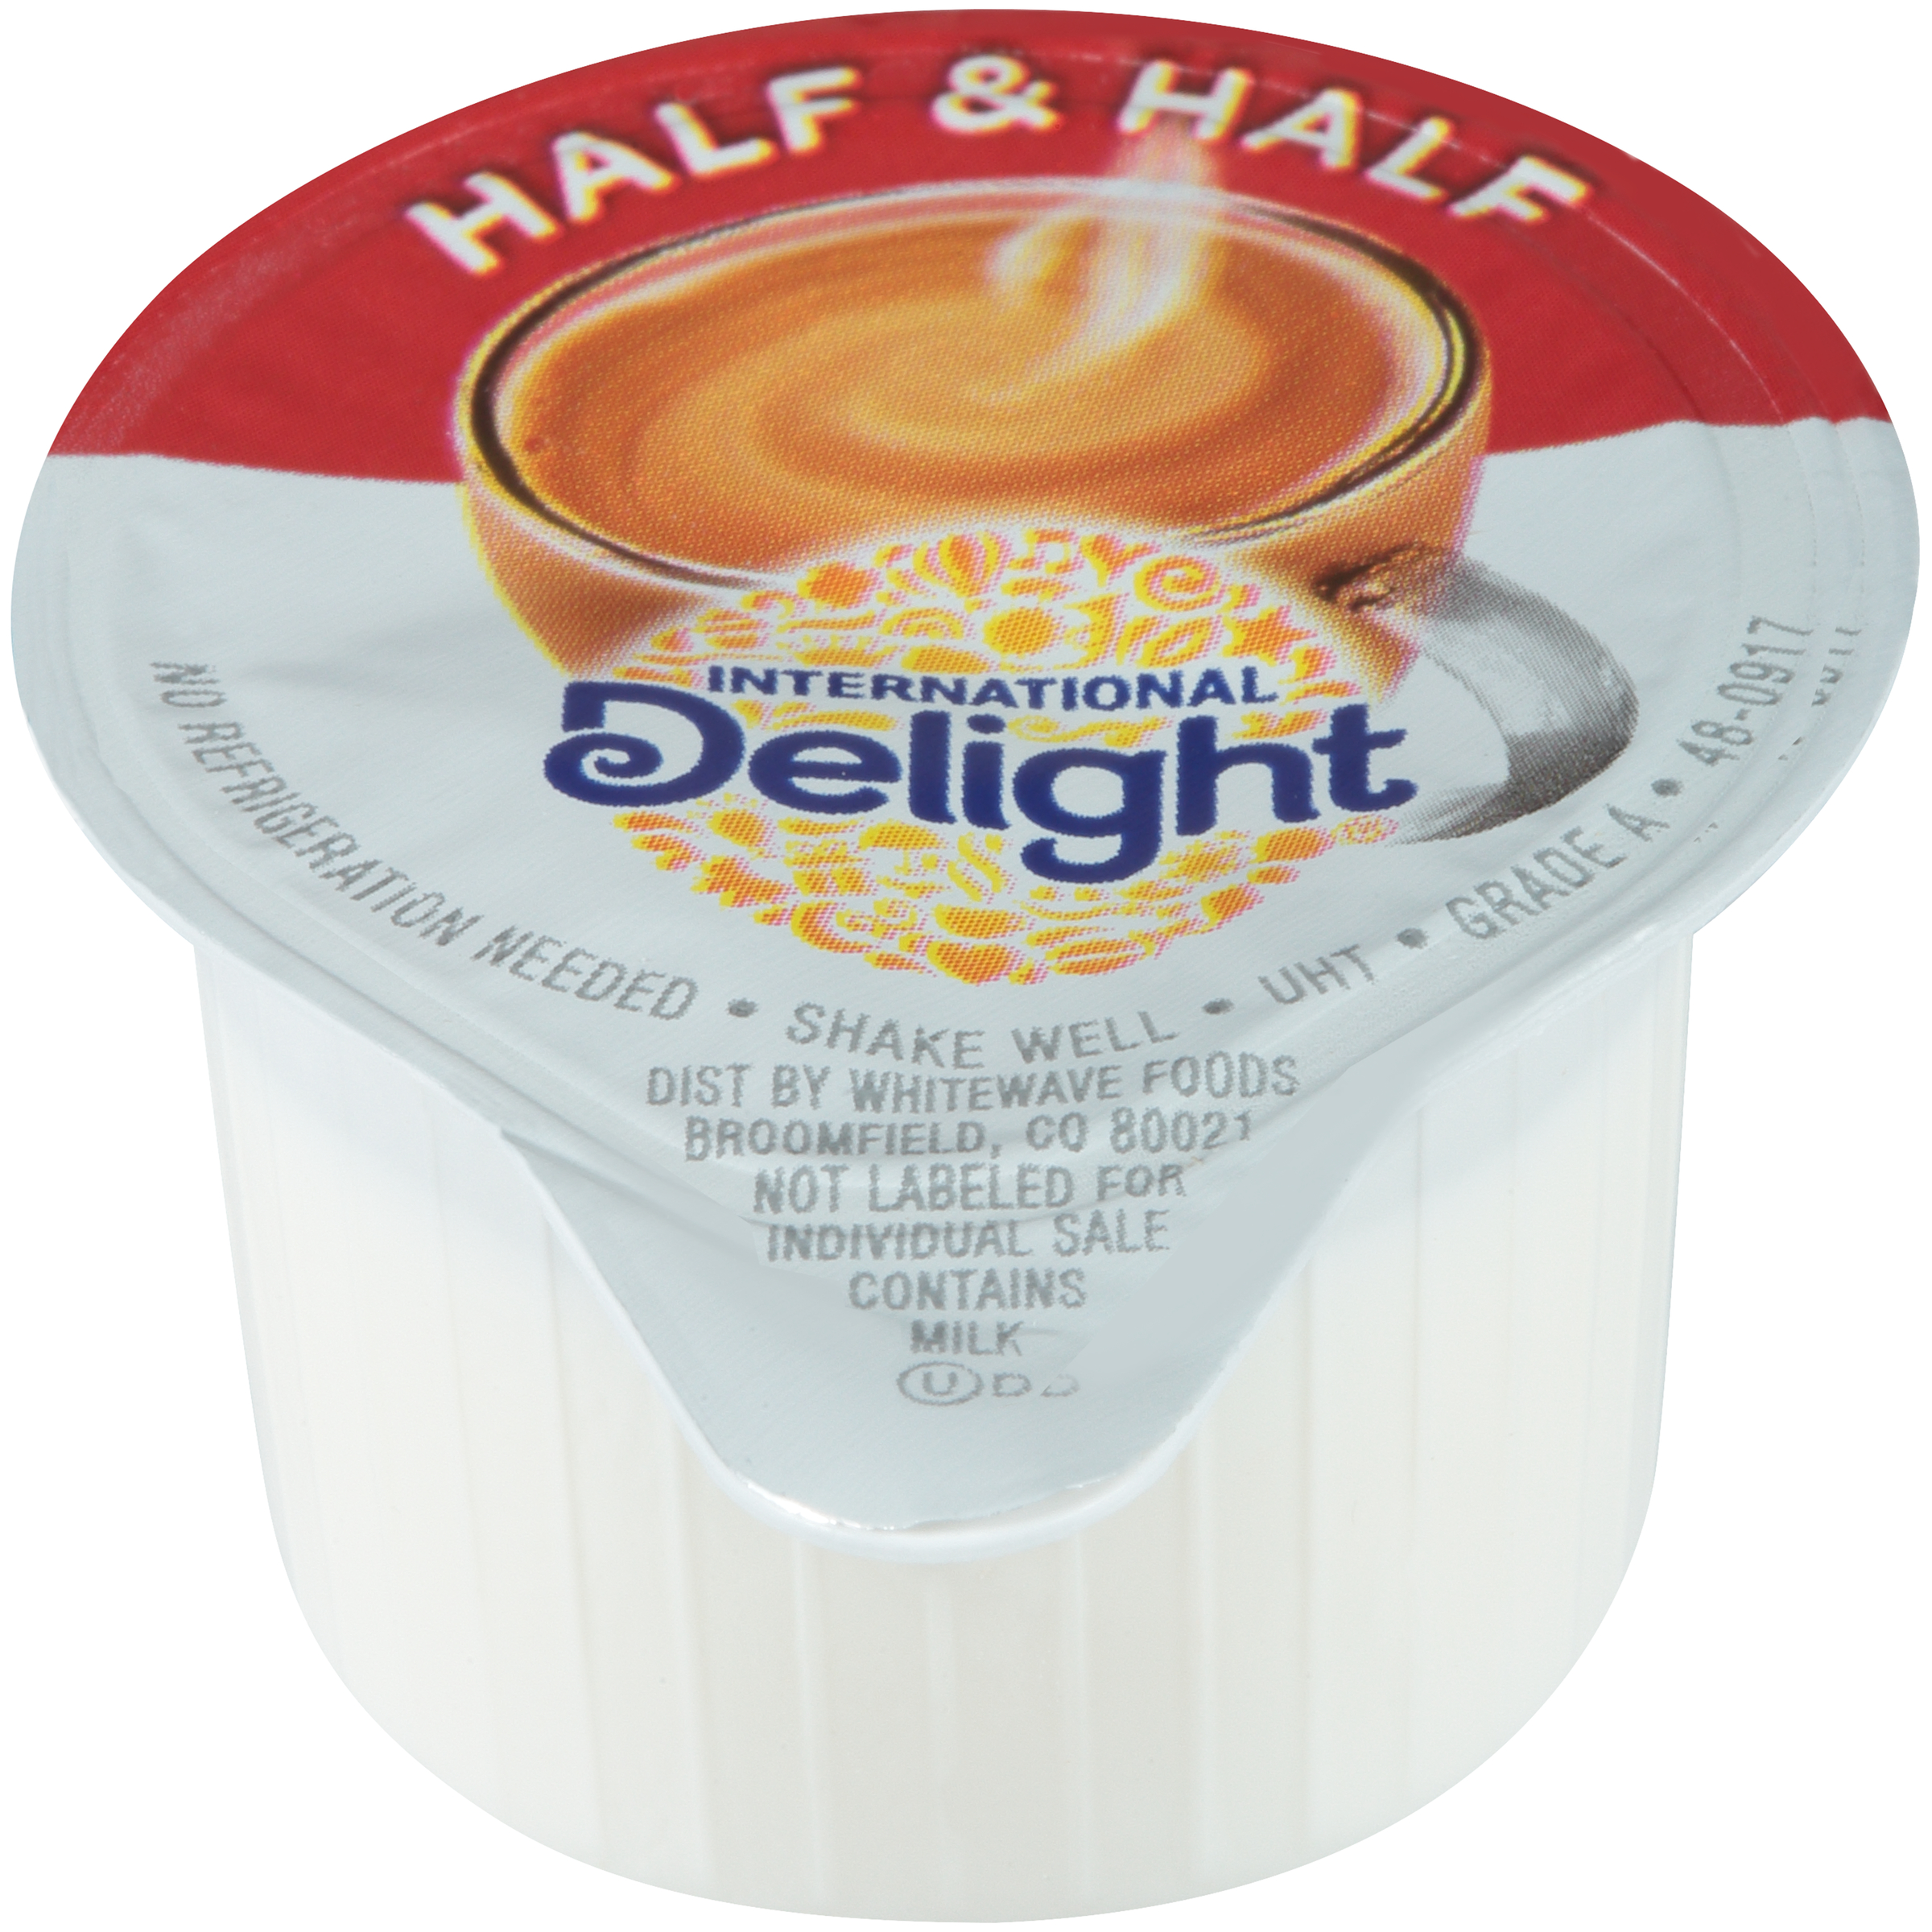 International Delight Coffee Creamer Singles, Half & Half (Food Service) 1 units per case 54.0 fl